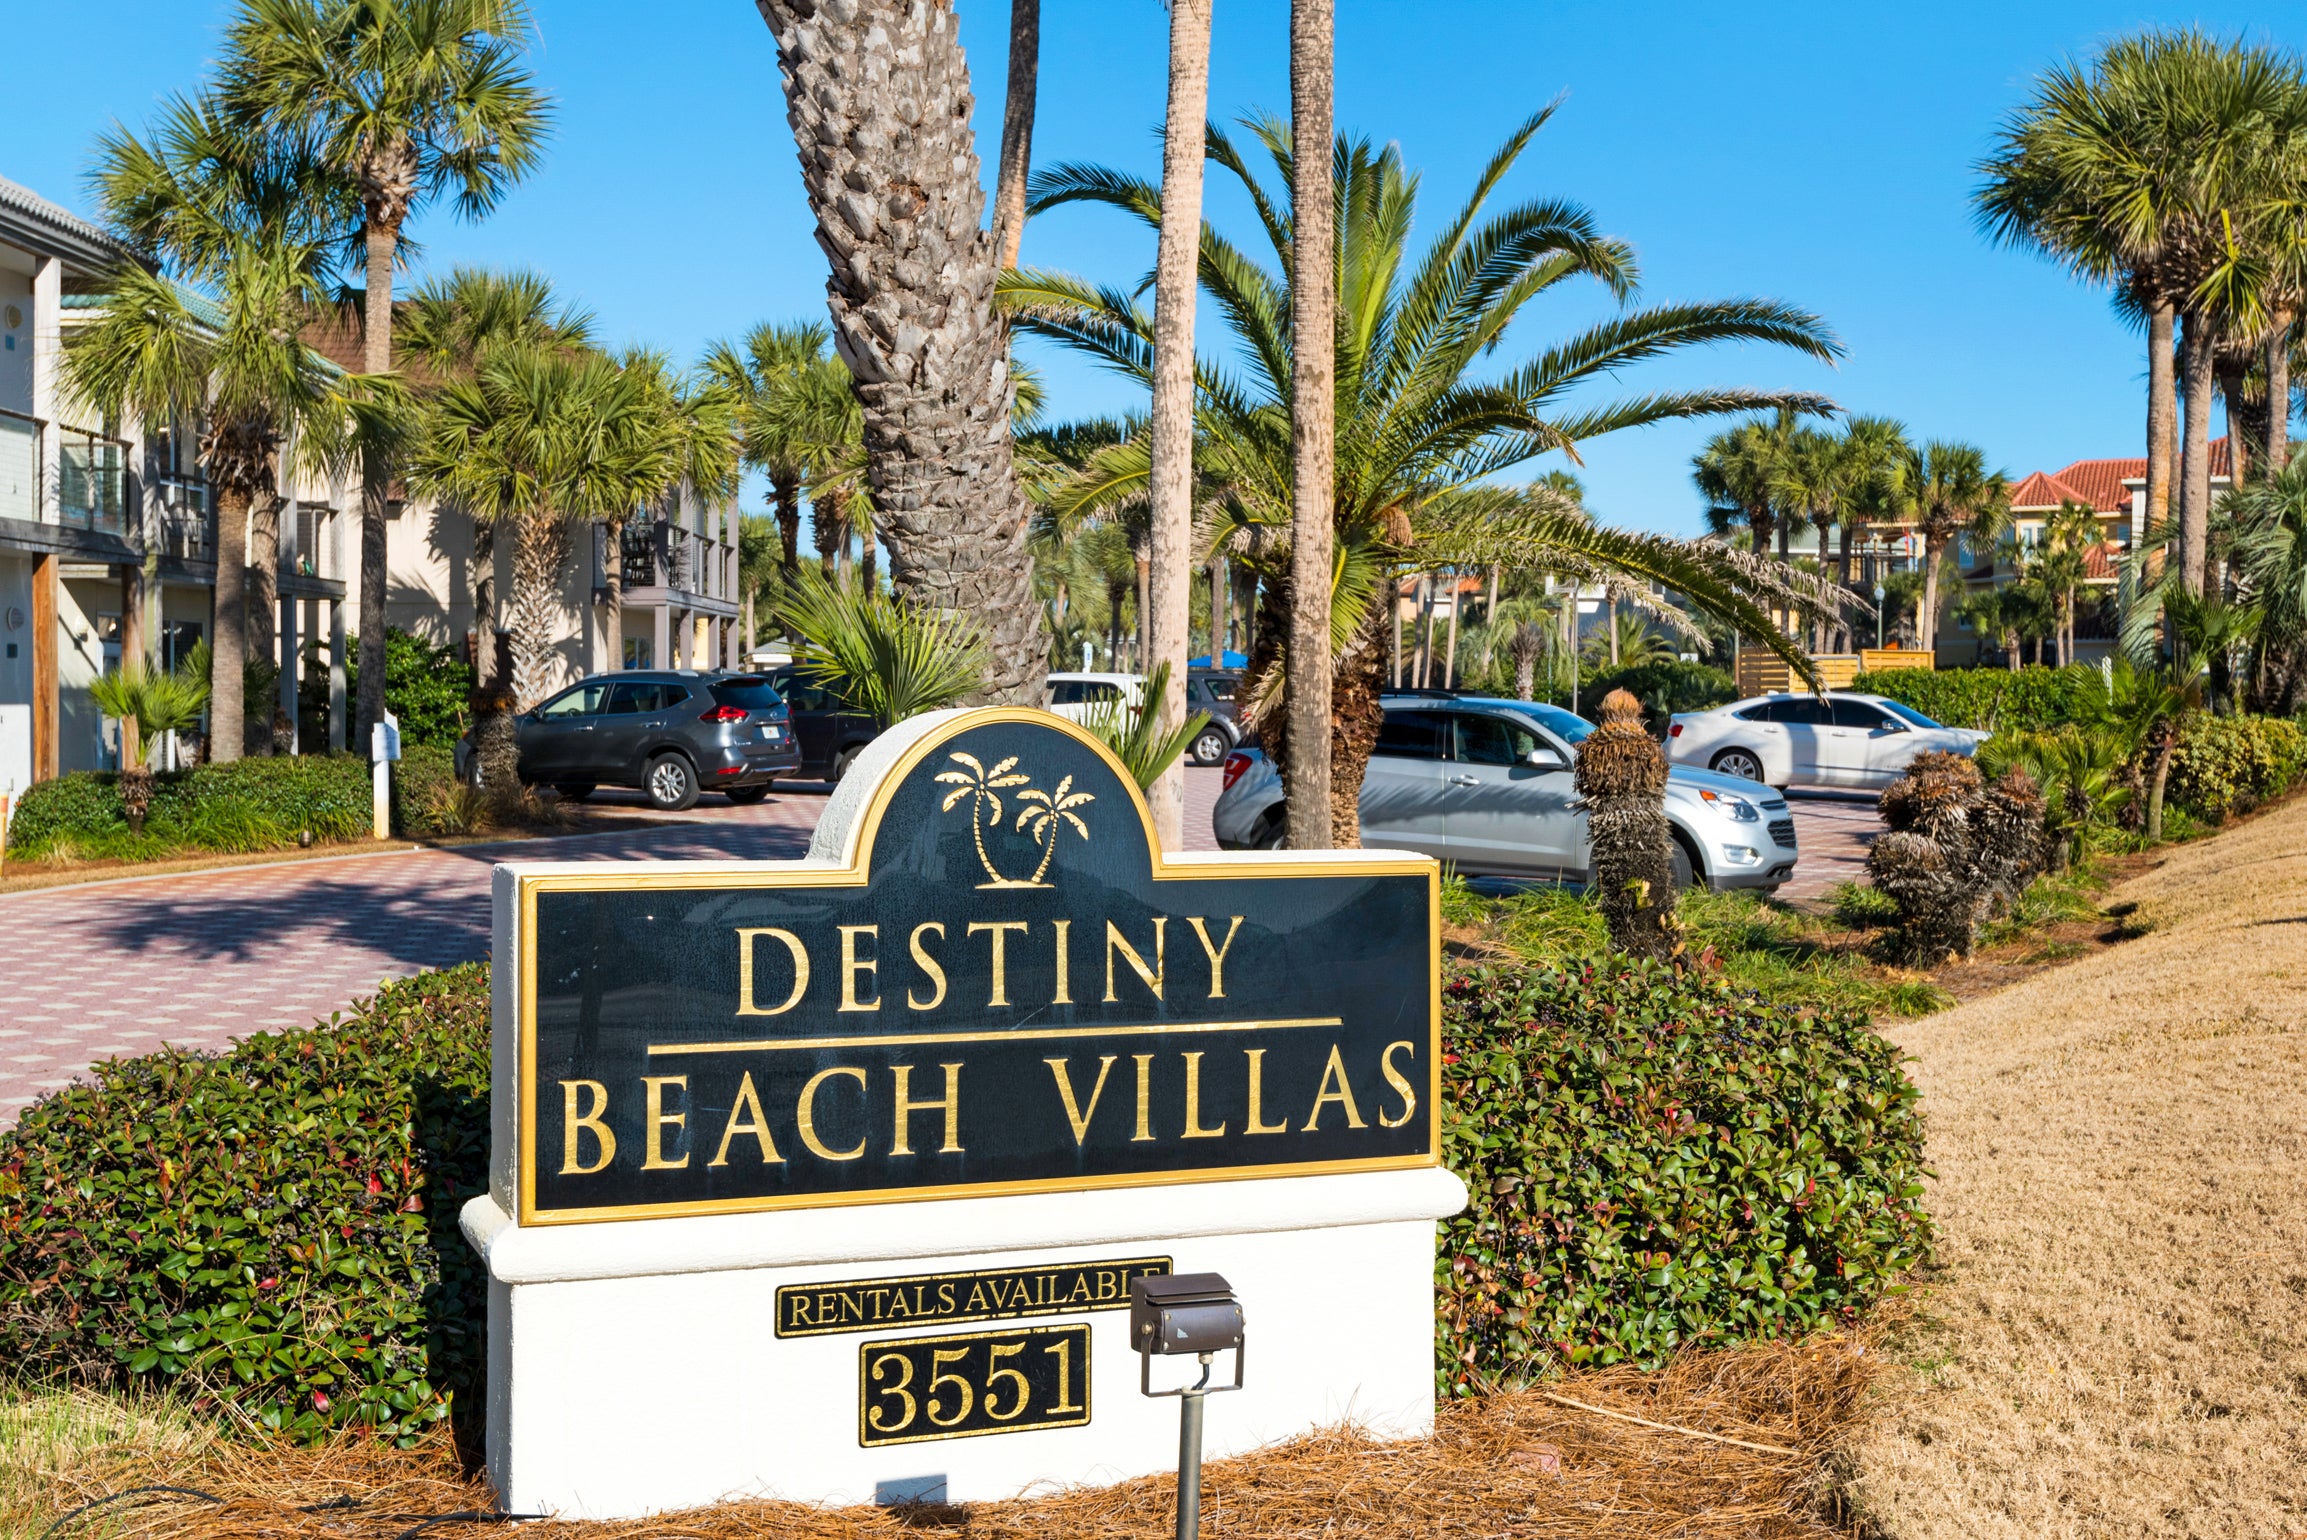 Welcome to Destiny Beach Villas